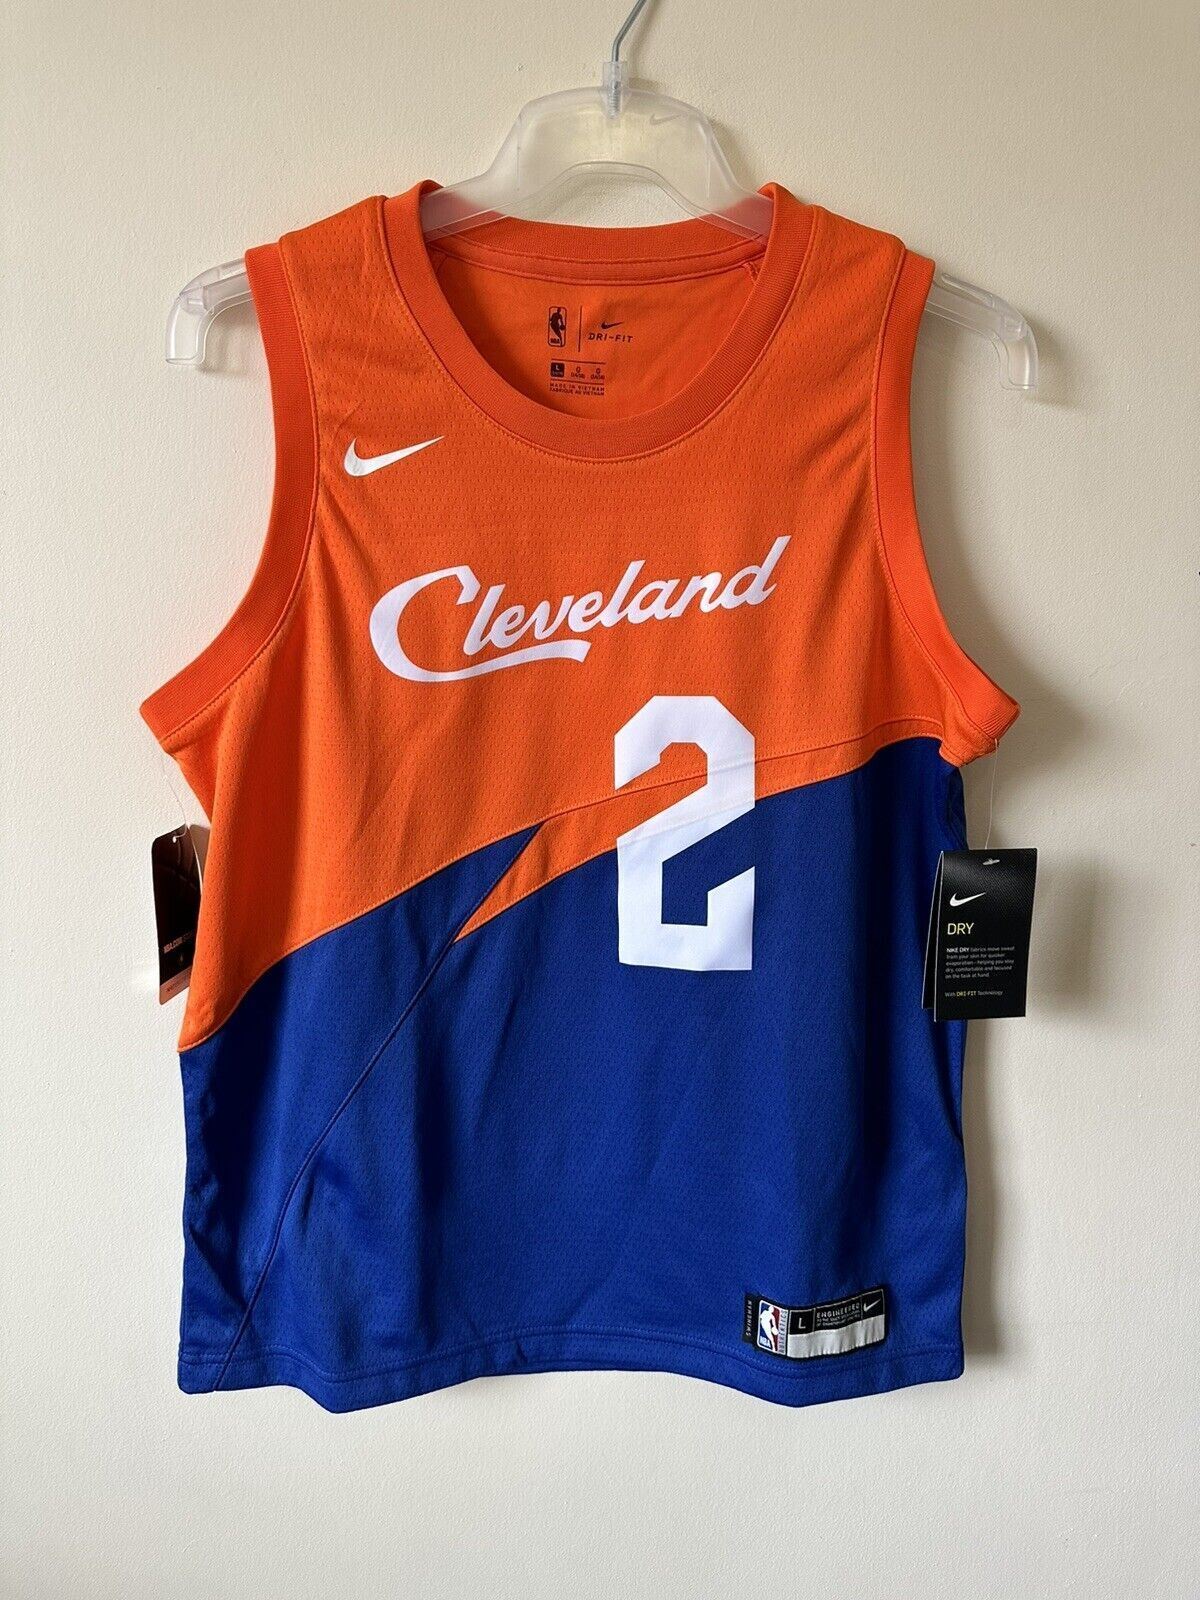 Nike NBA Cleveland Cavaliers Swingman Edition Jersey Youth 12-13 Years